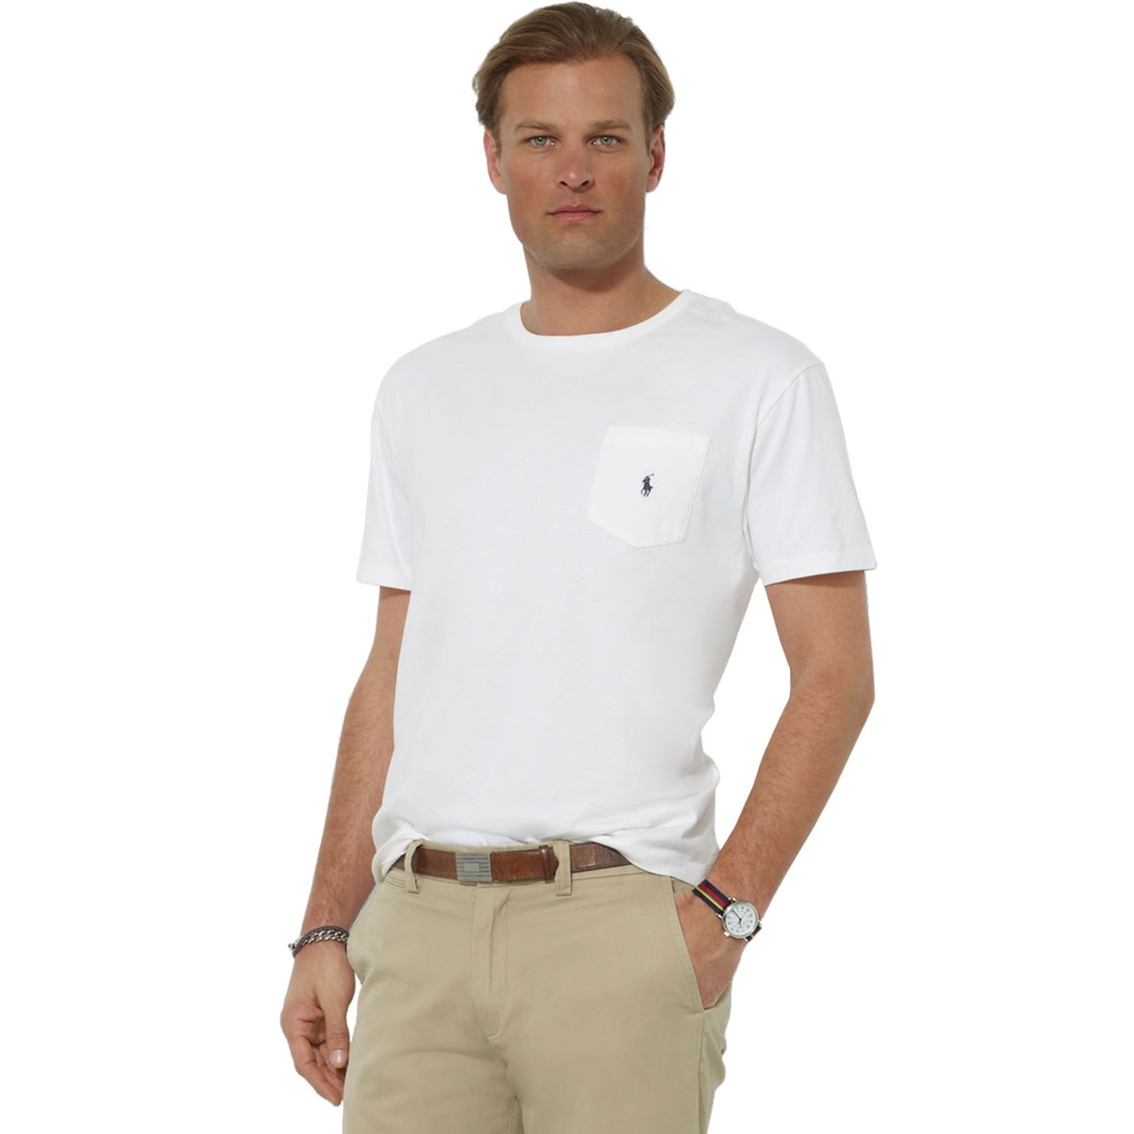 Polo Ralph Lauren Pocket Crew Neck Tee | Shirts | Clothing ...